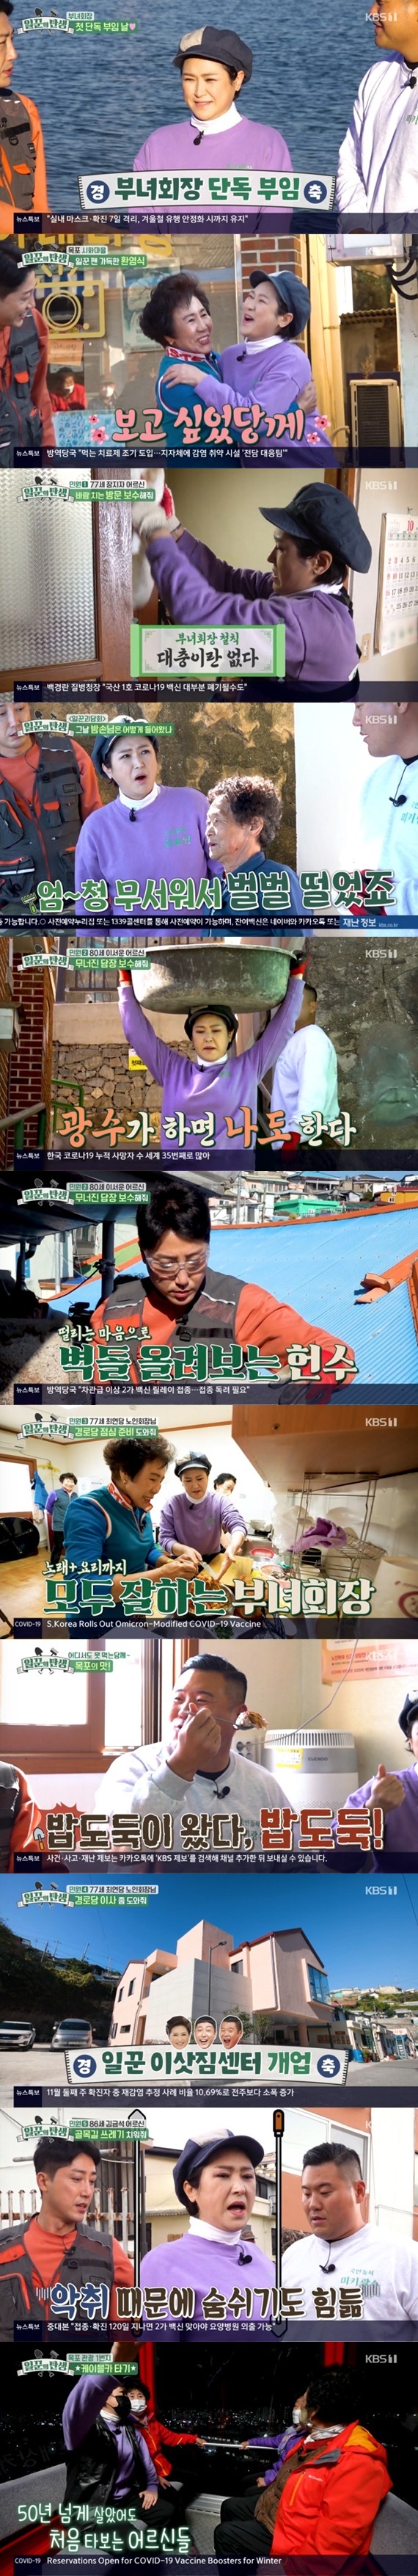 KBS1 '일꾼의 탄생' 캡처